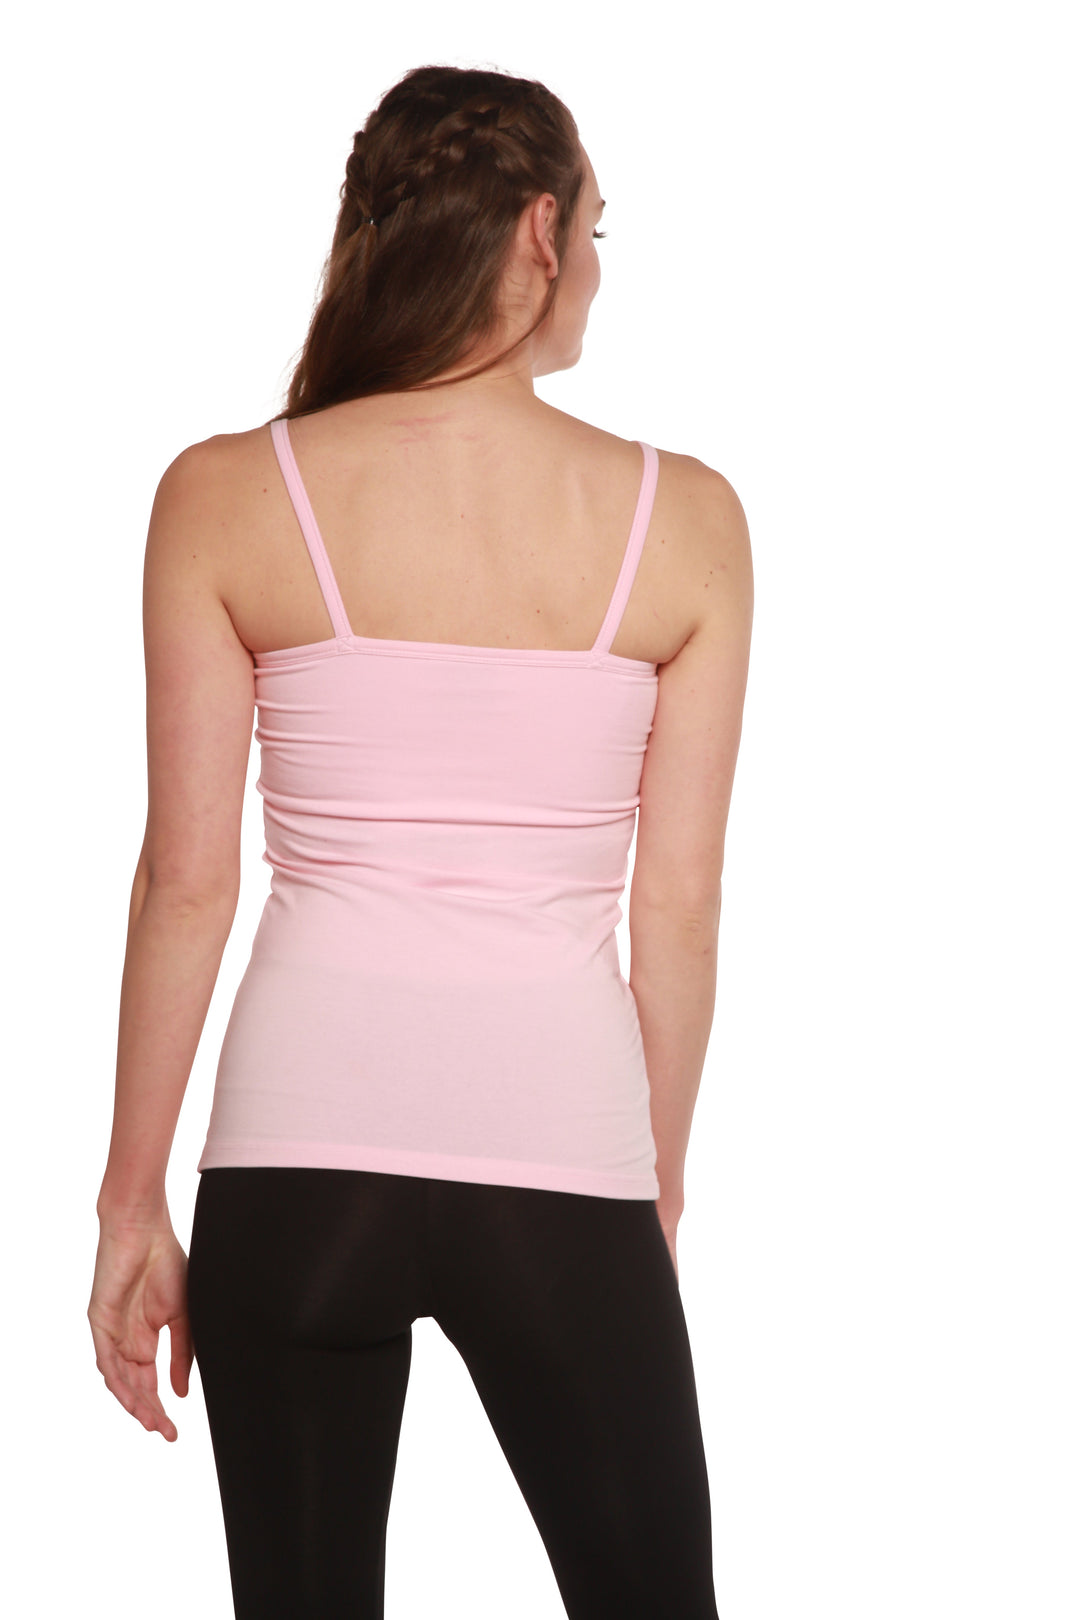 Women's Camisole Cotton Tank Top with Shelf Bra Adjustable Wide